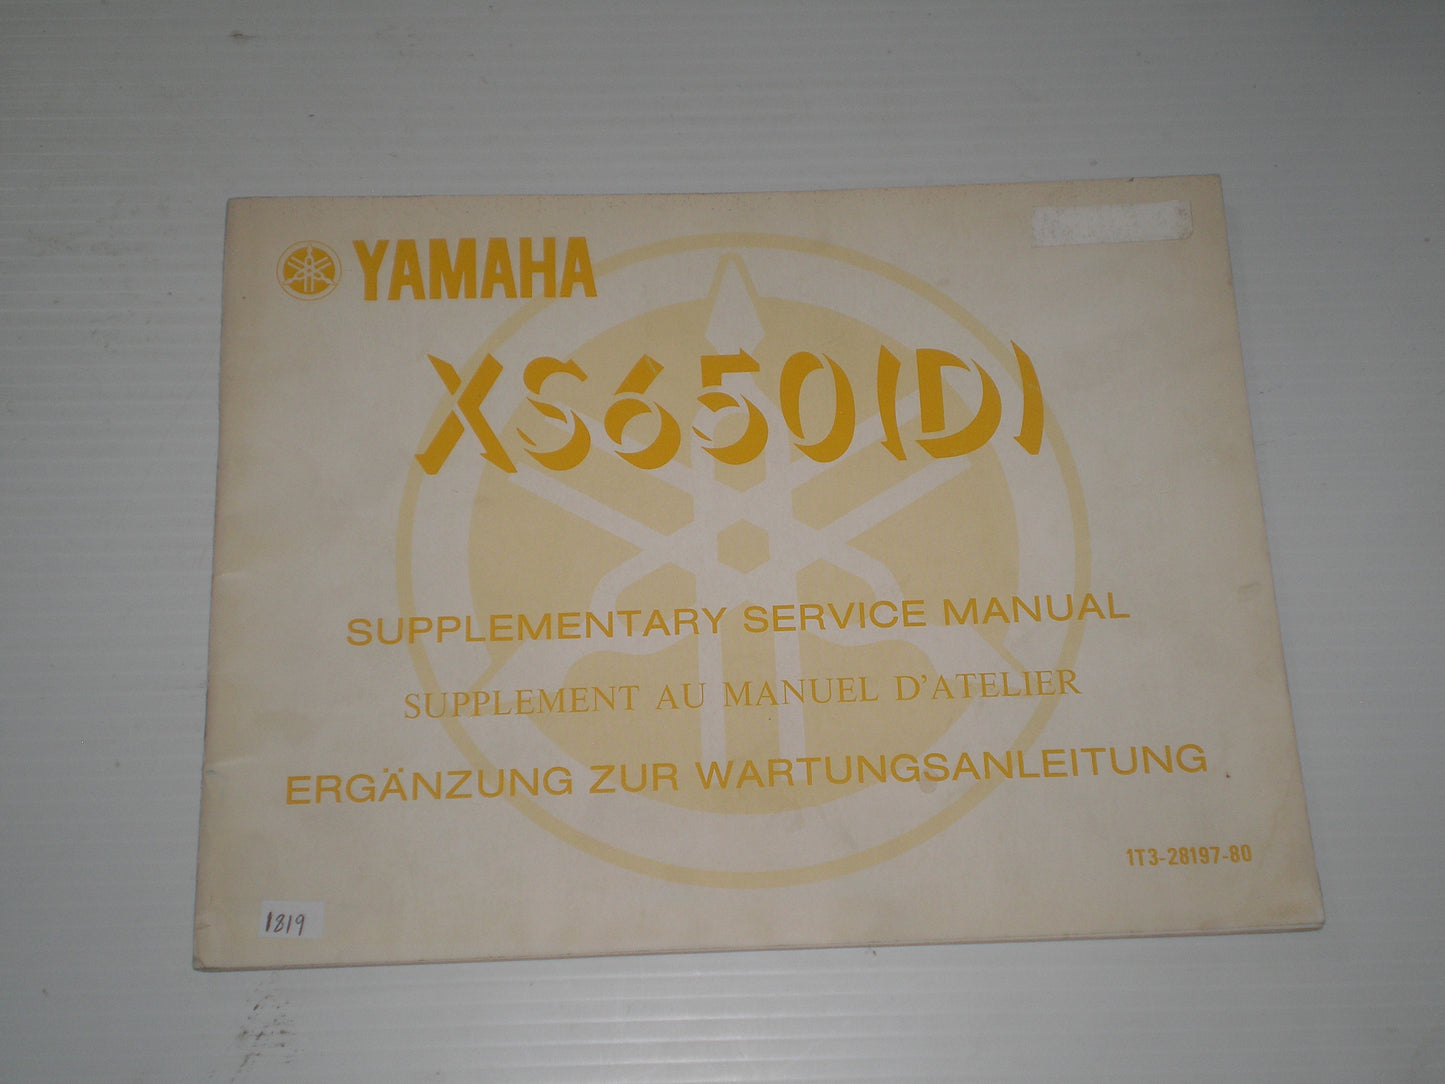 YAMAHA XS650 D 1977  Service Manual Supplement  1T3-28197-80  #1819